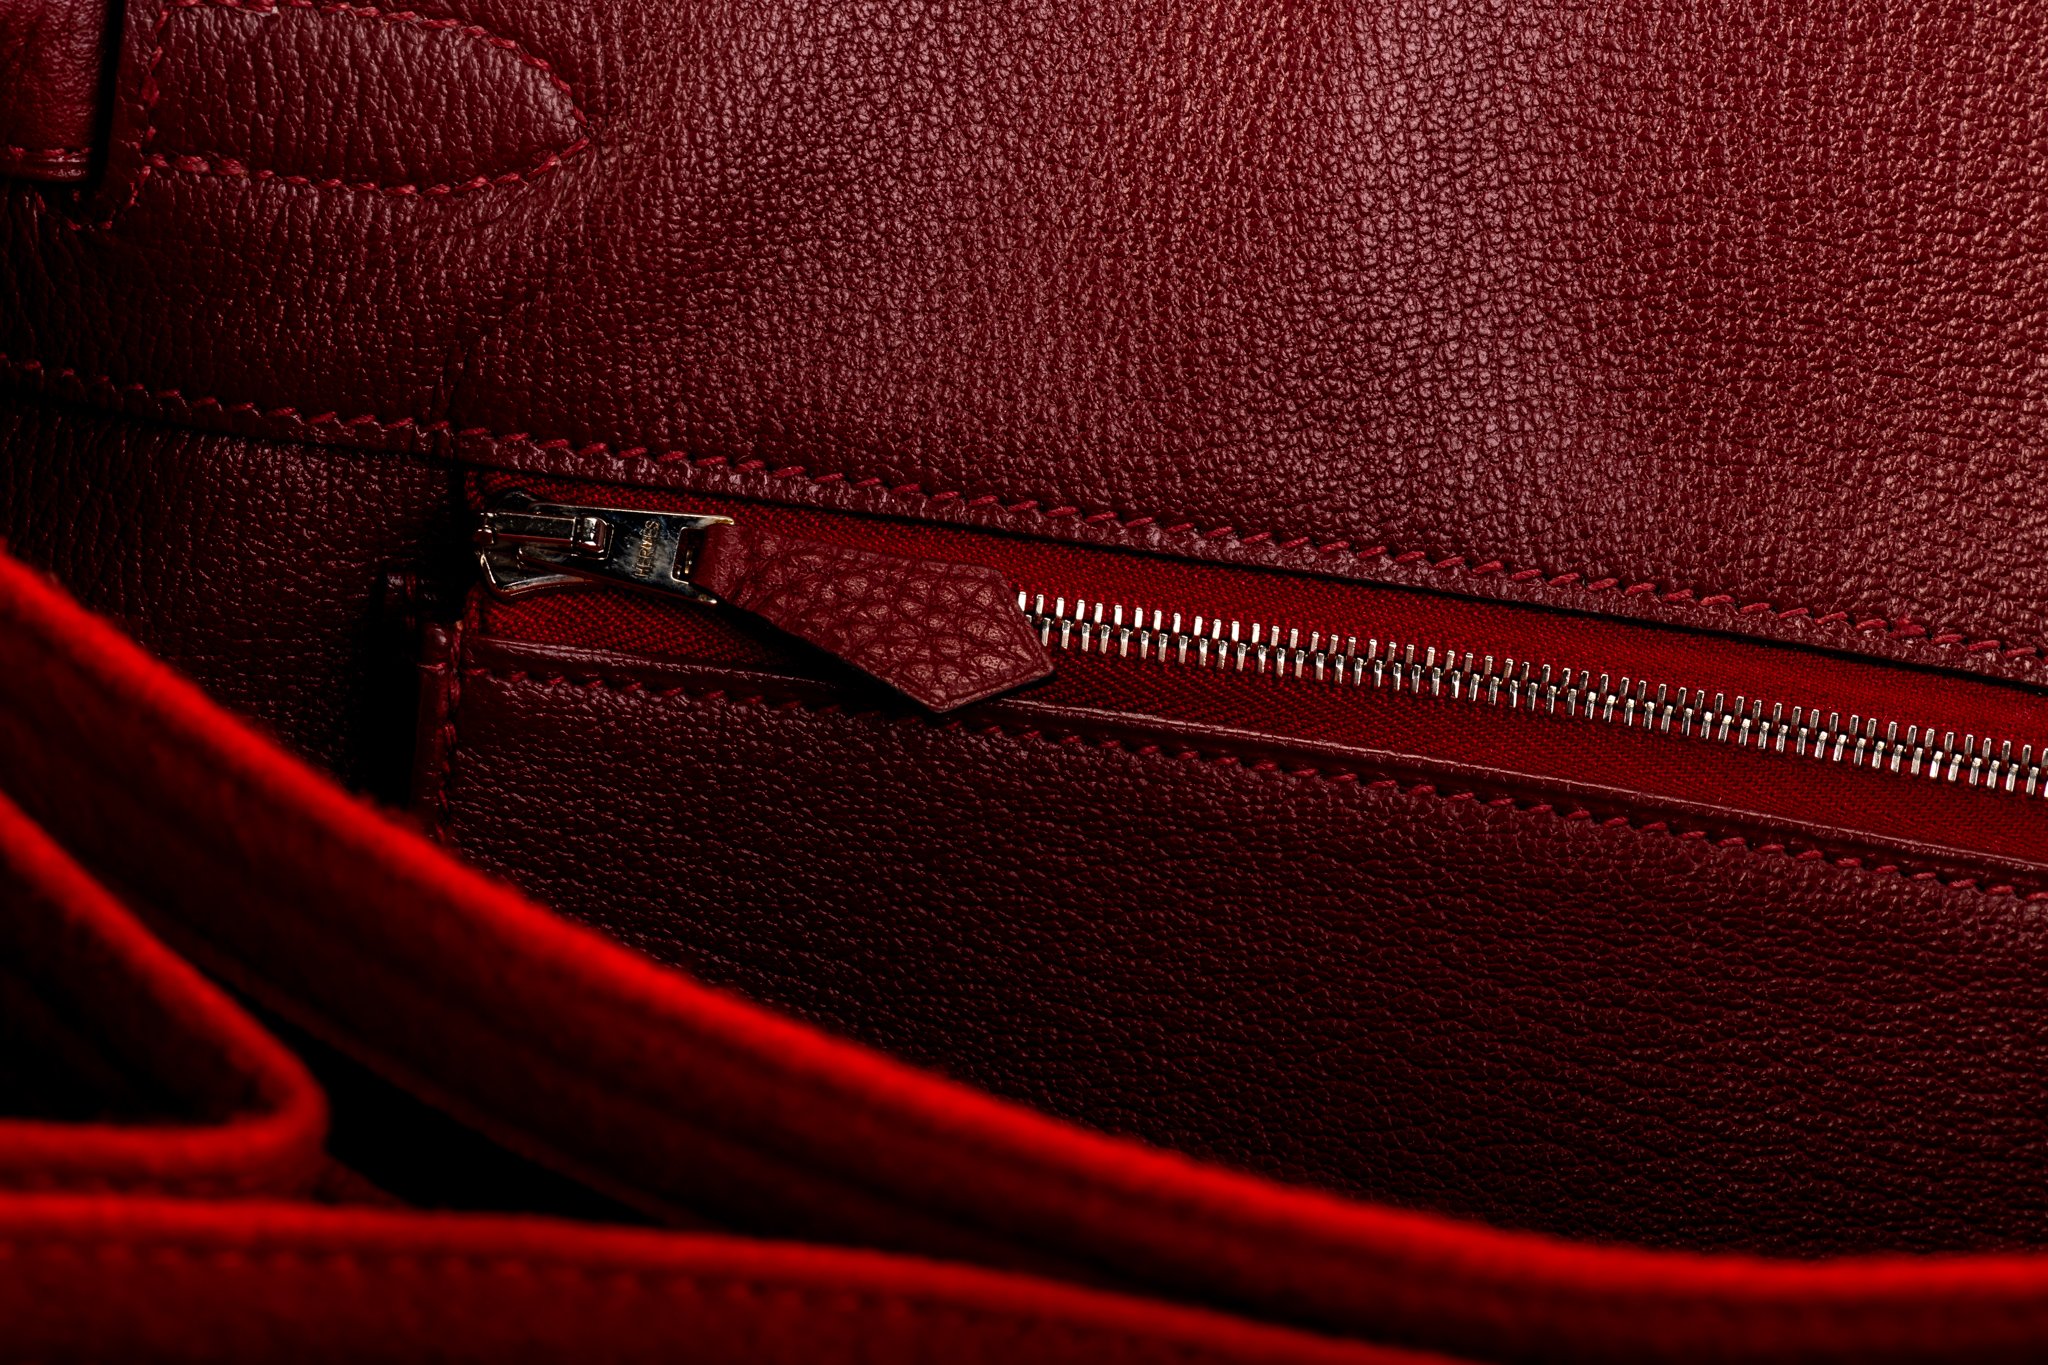 Hermès Birkin 35 Taurillon Clemence Rouge Casaque